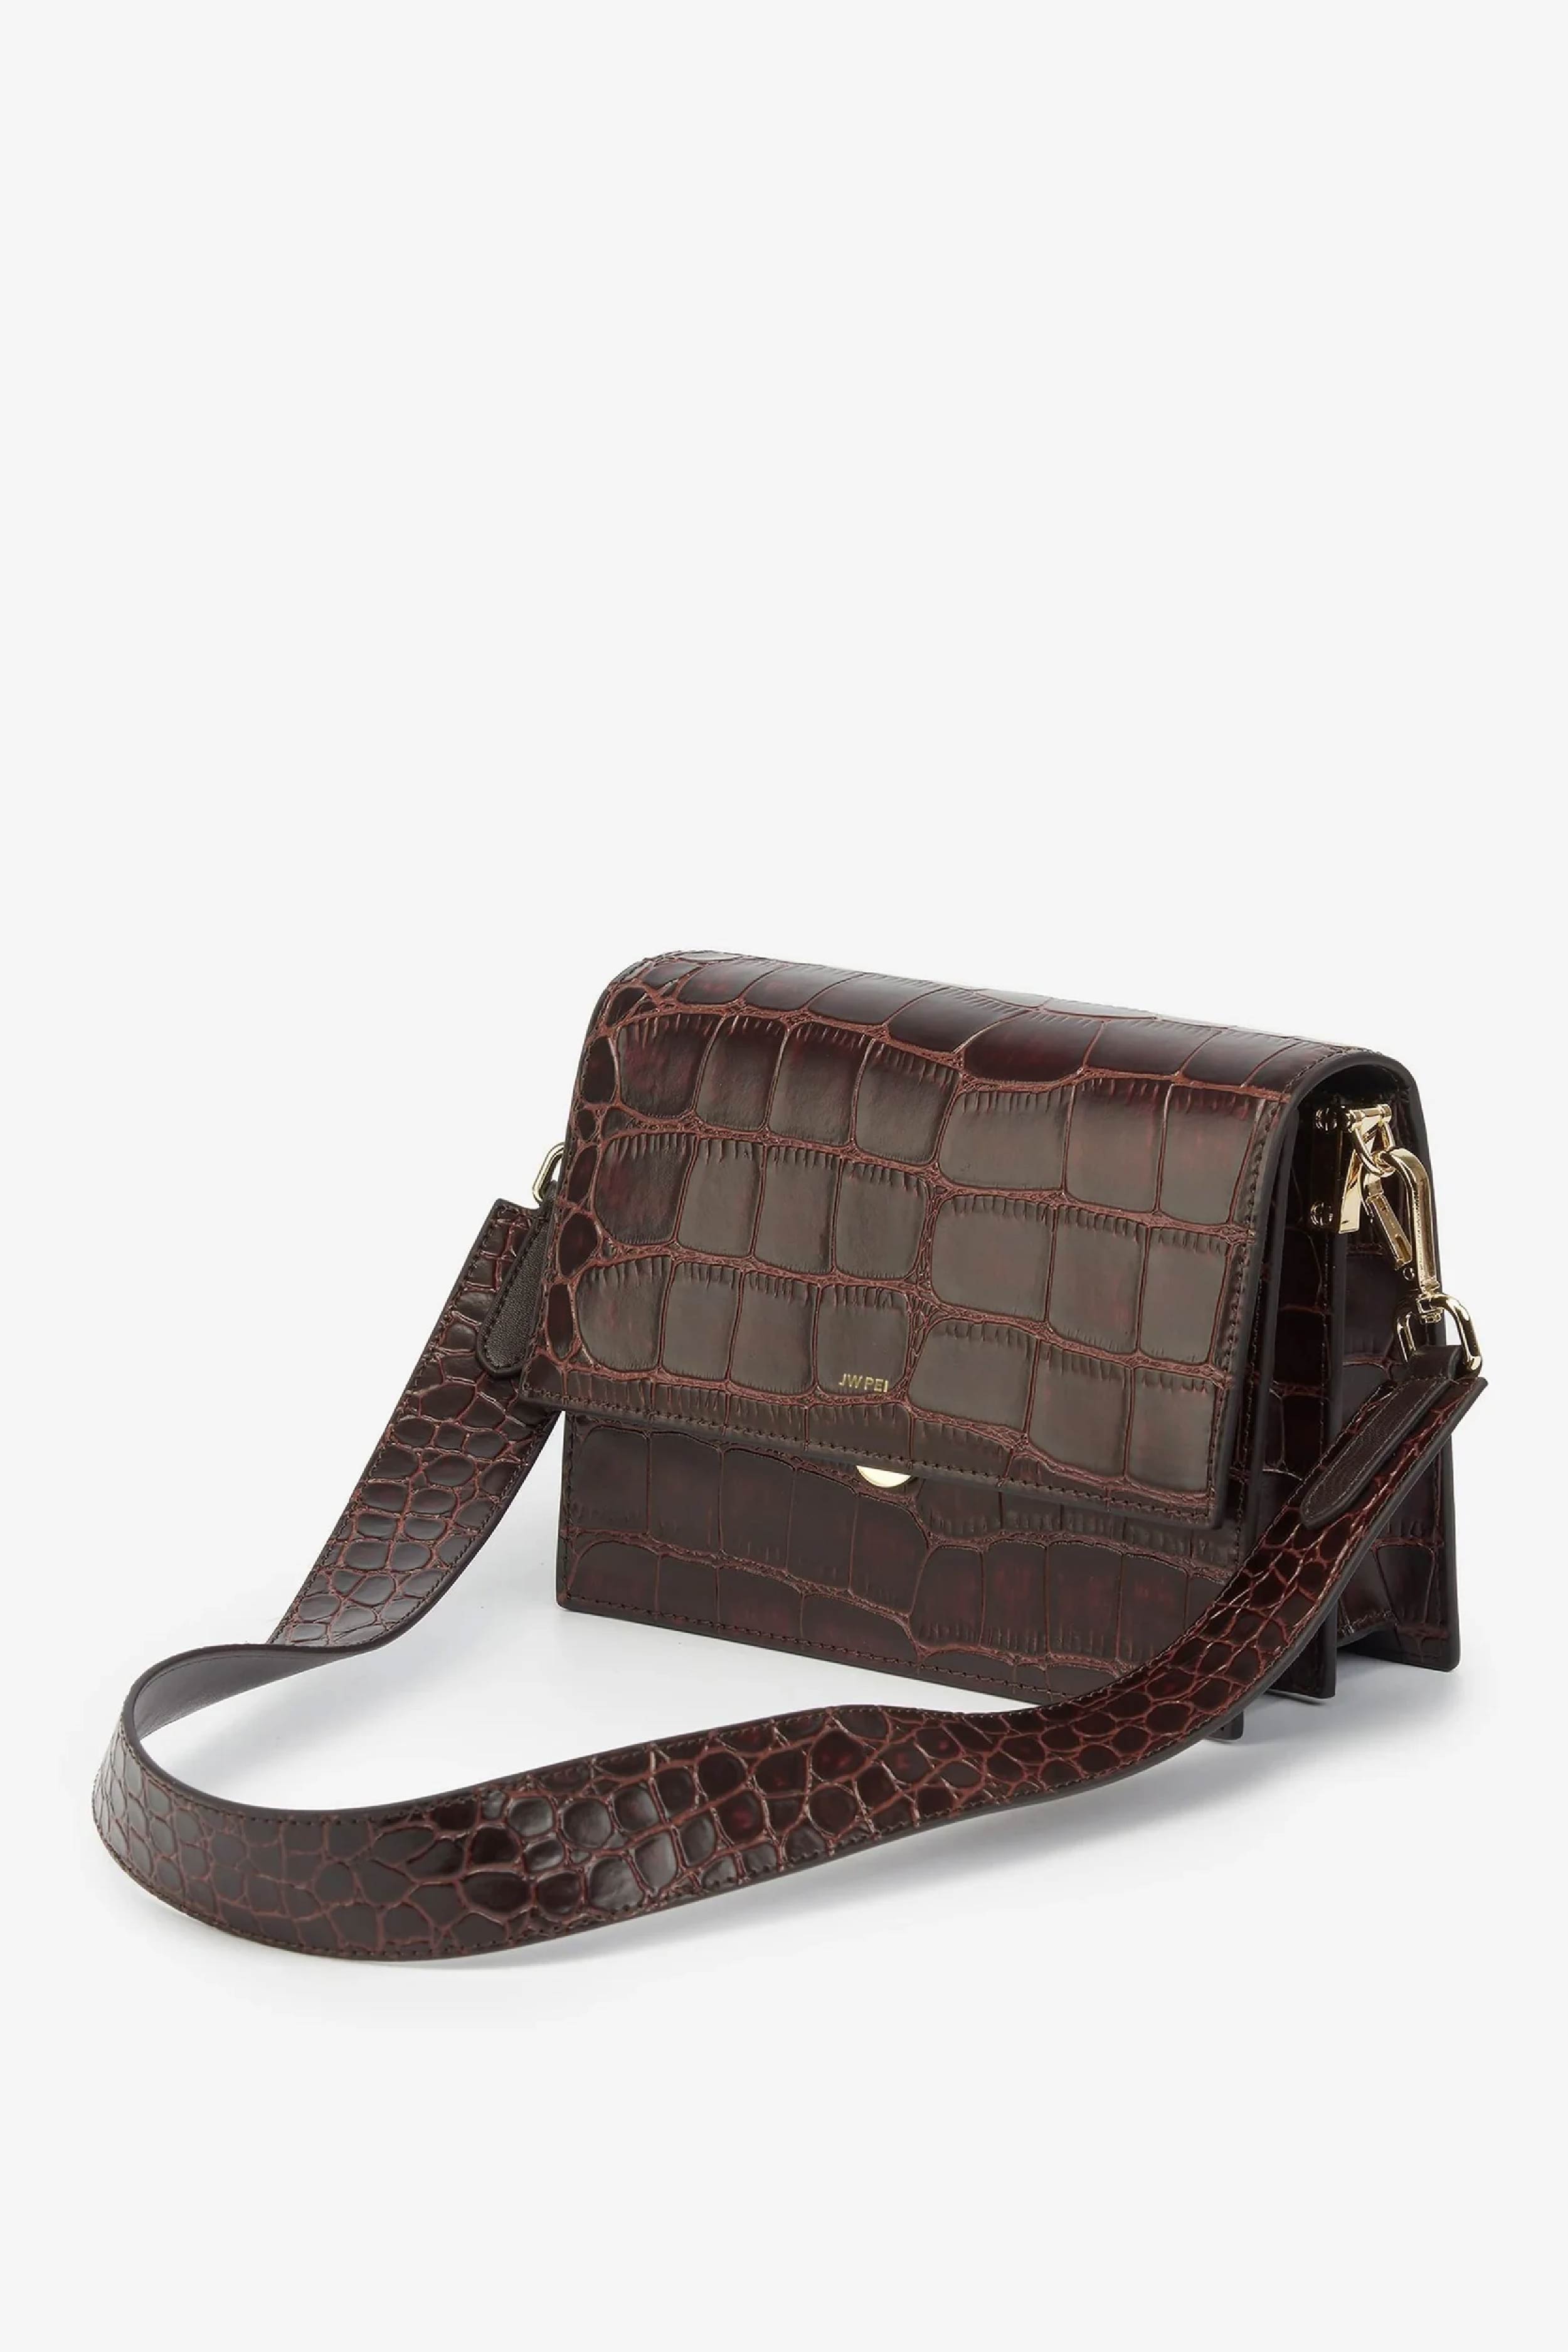 JW PEI Mini Flap Bag Brown Croc – BBGSHOPHK